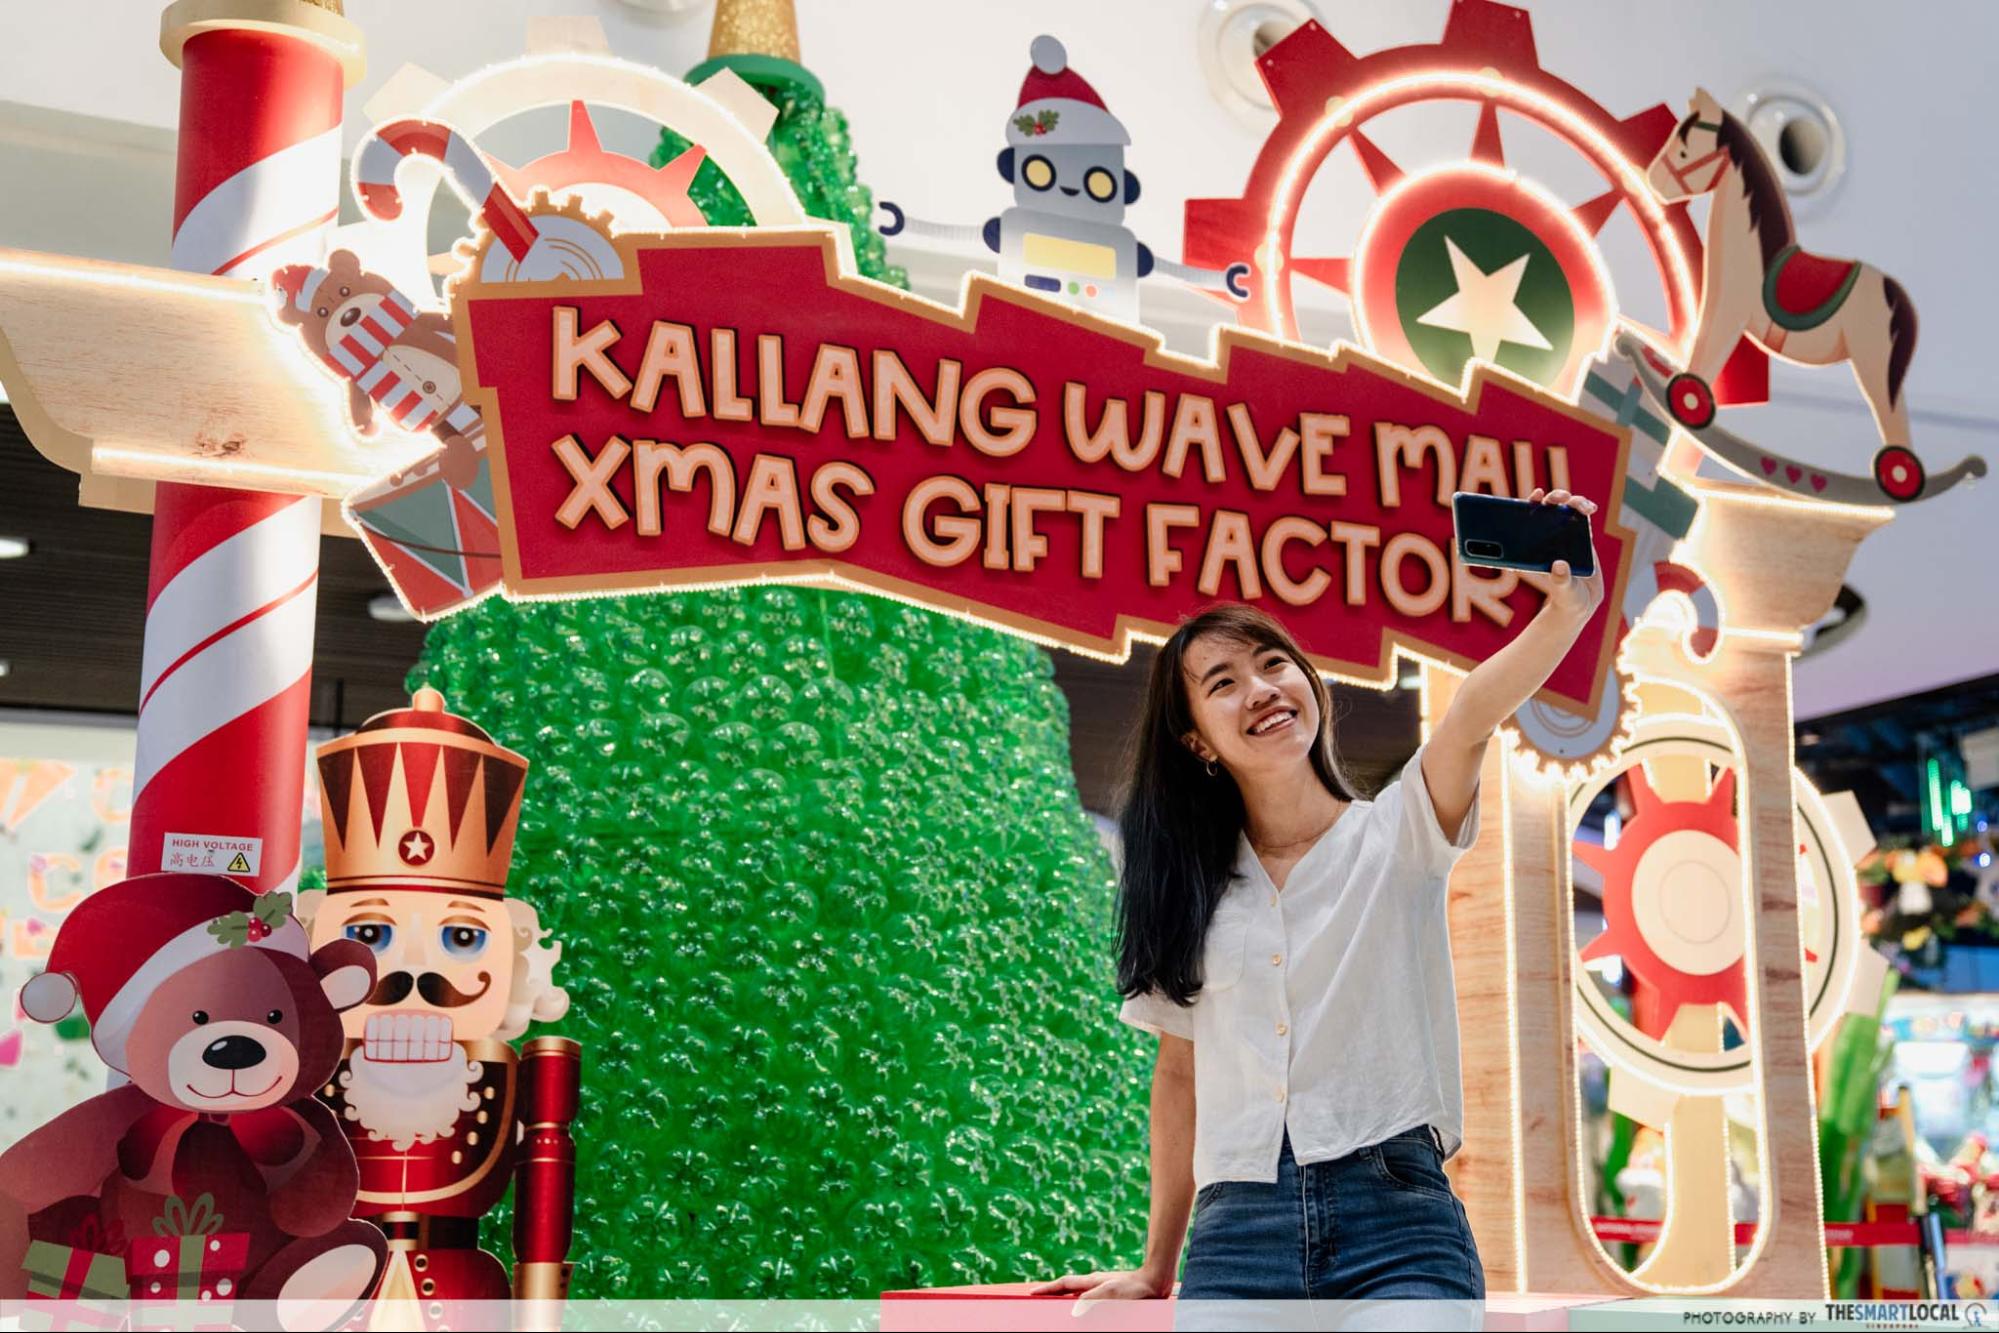 Kallang wave mall christmas 2020 - X’mas Gift Factory